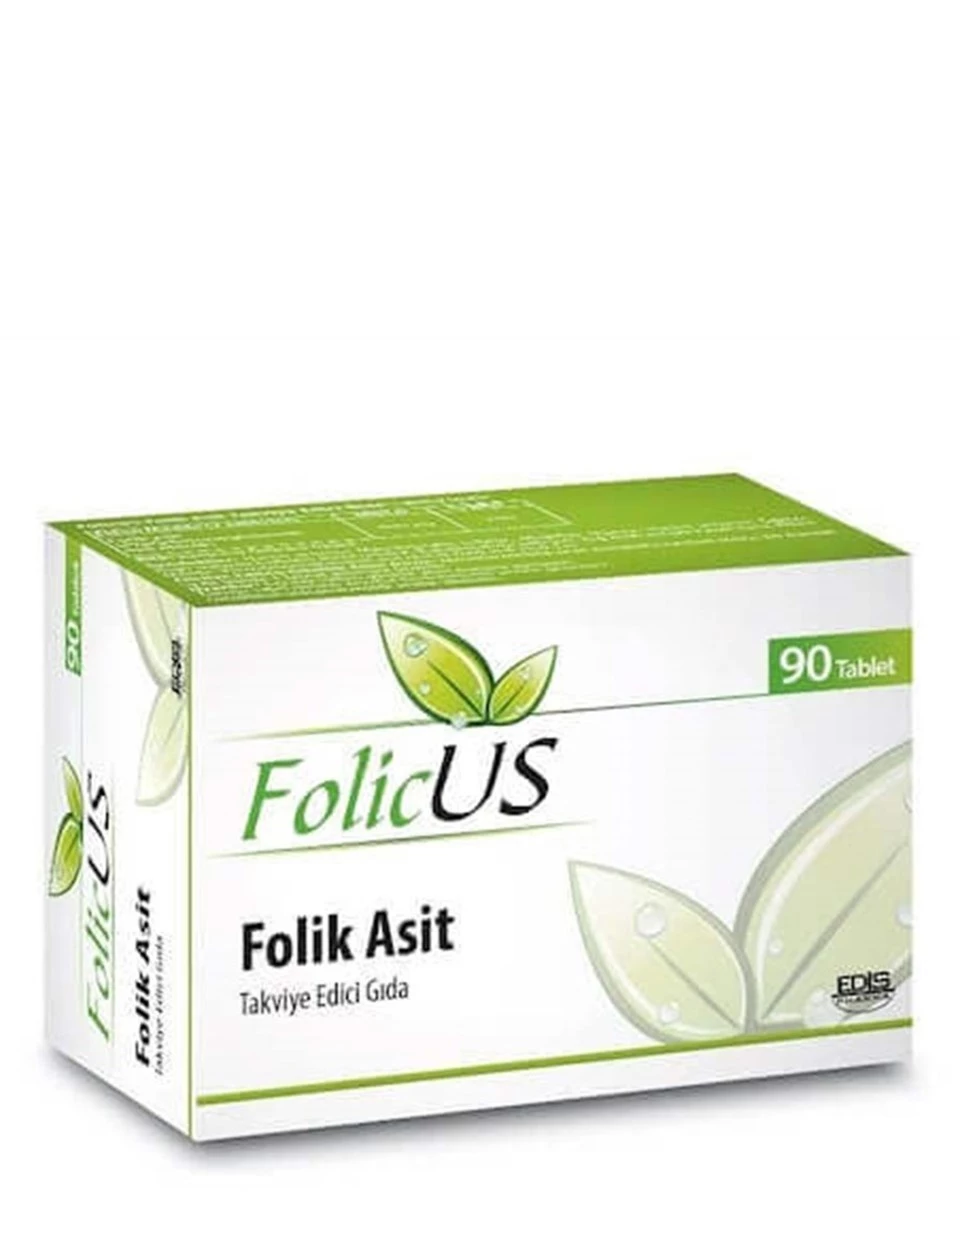 Folicus 90 tb